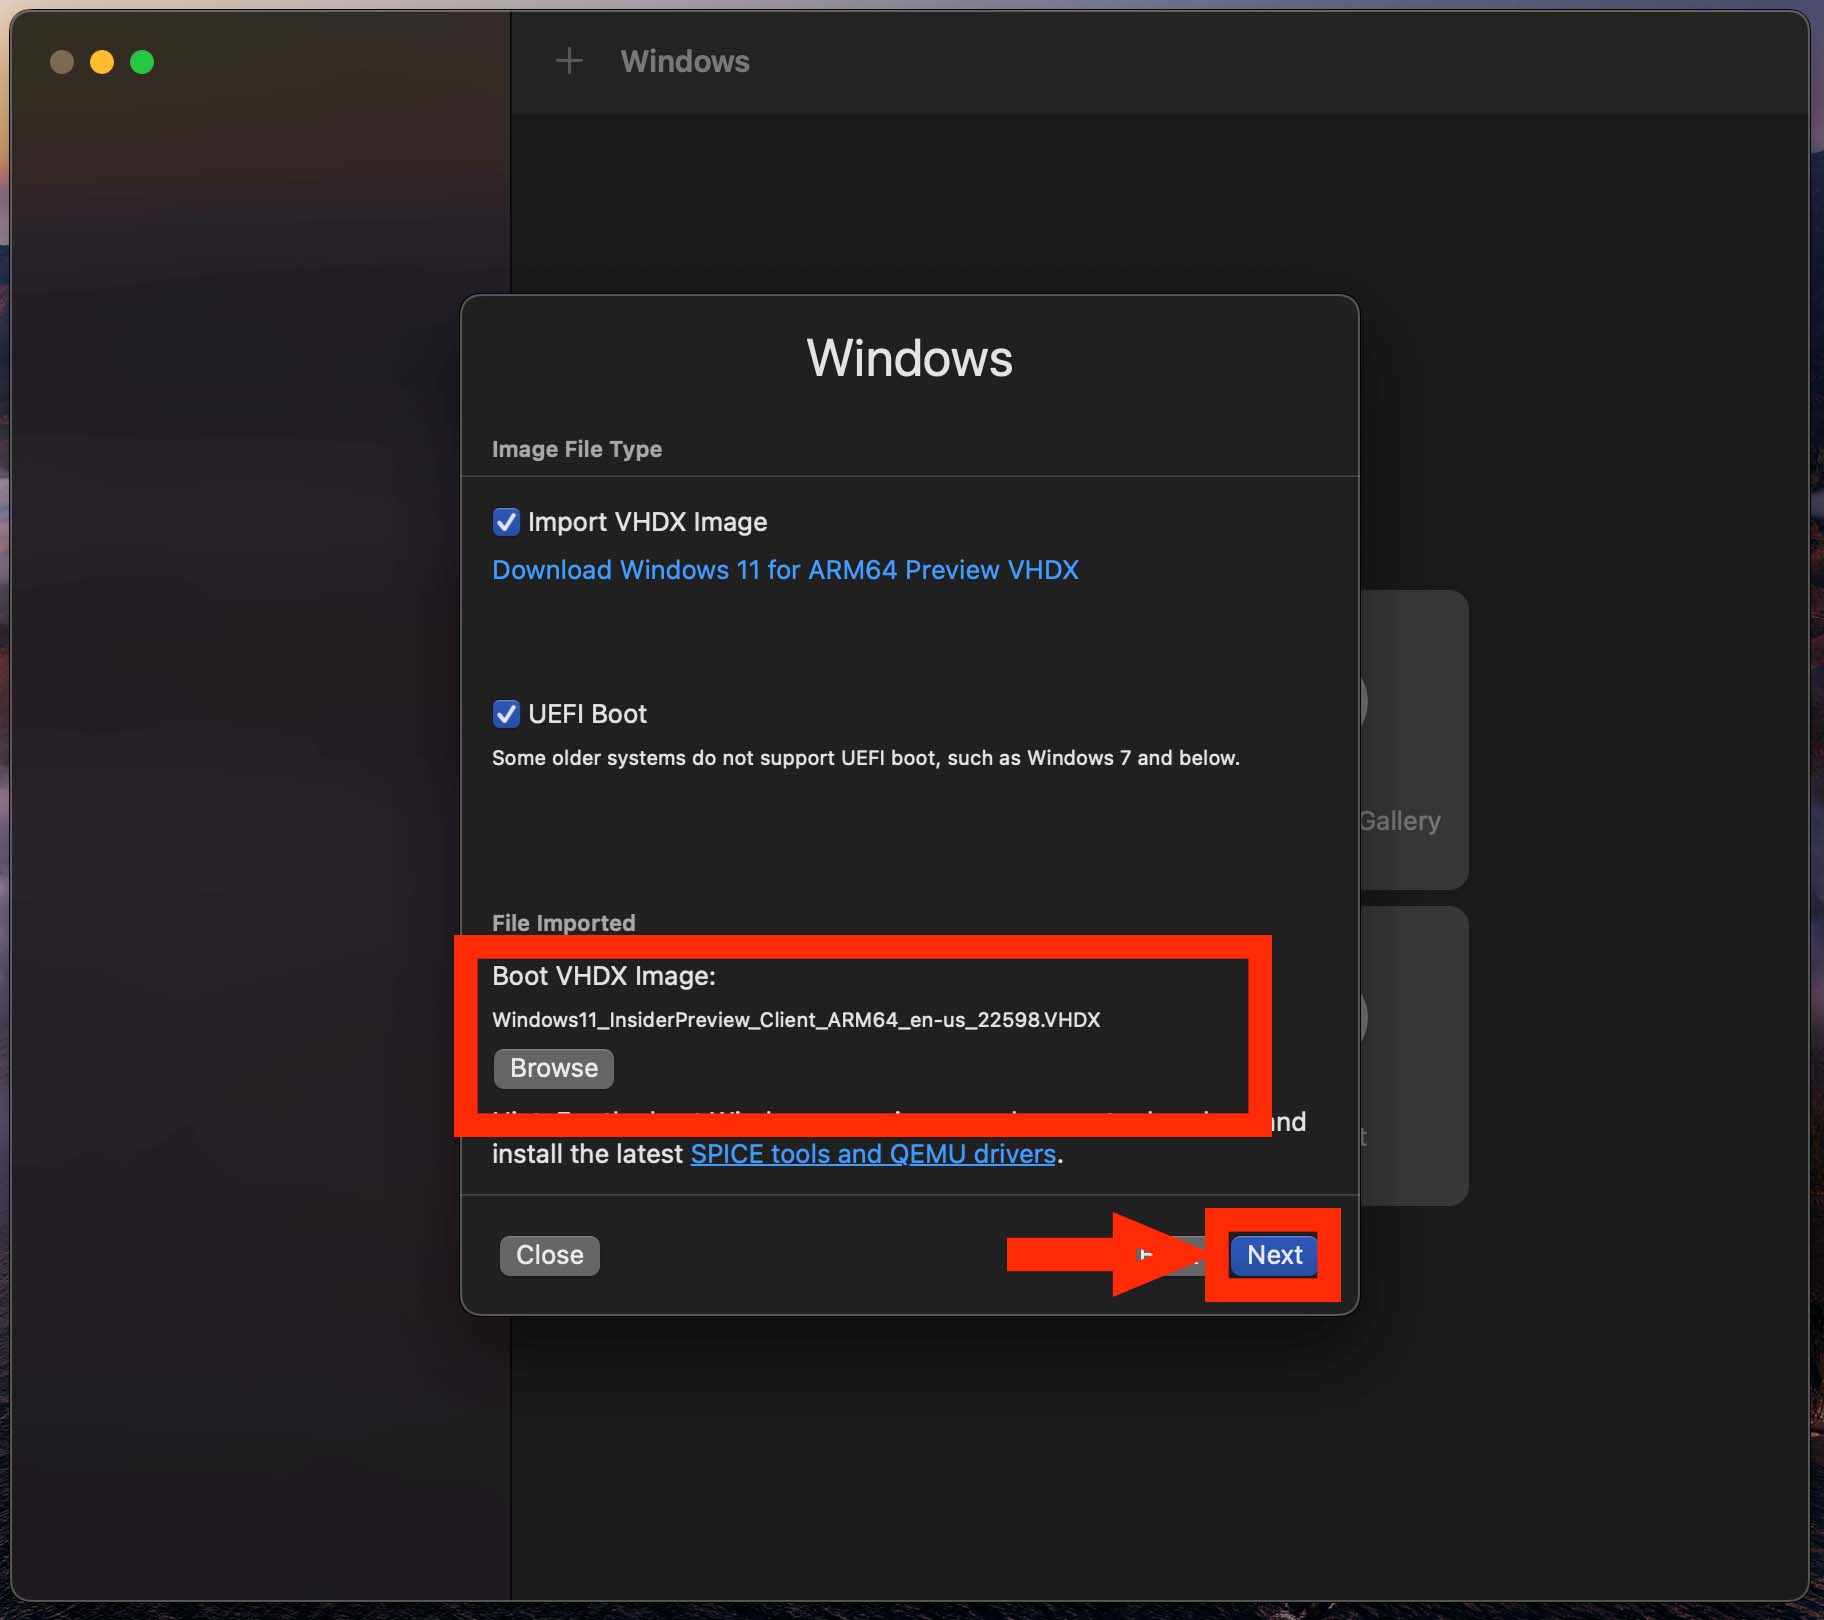 Windows 11 selecionada